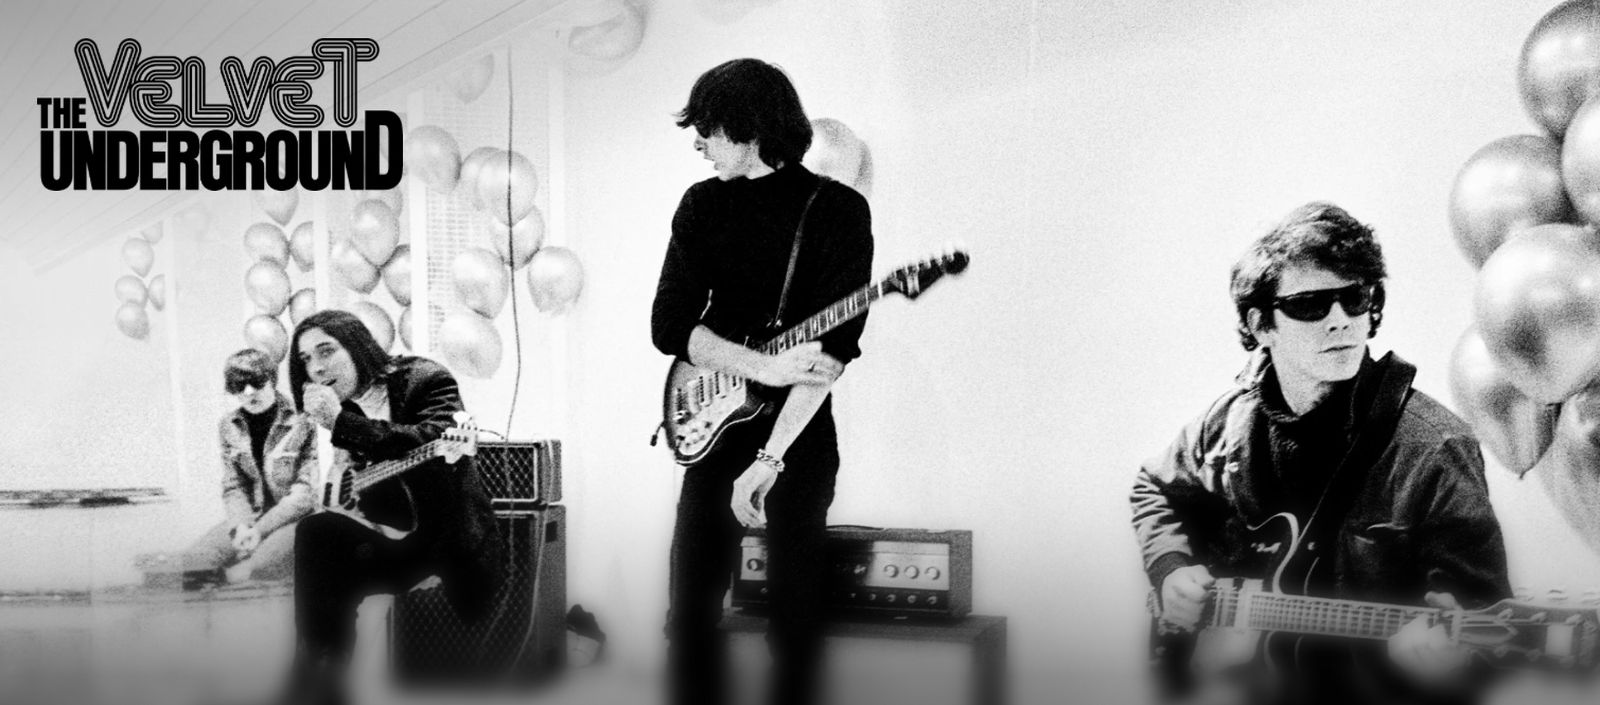 Apple TV+ Shares &#39;The Velvet Underground&#39; Trailer Ahead of October 15  Premiere - MacRumors